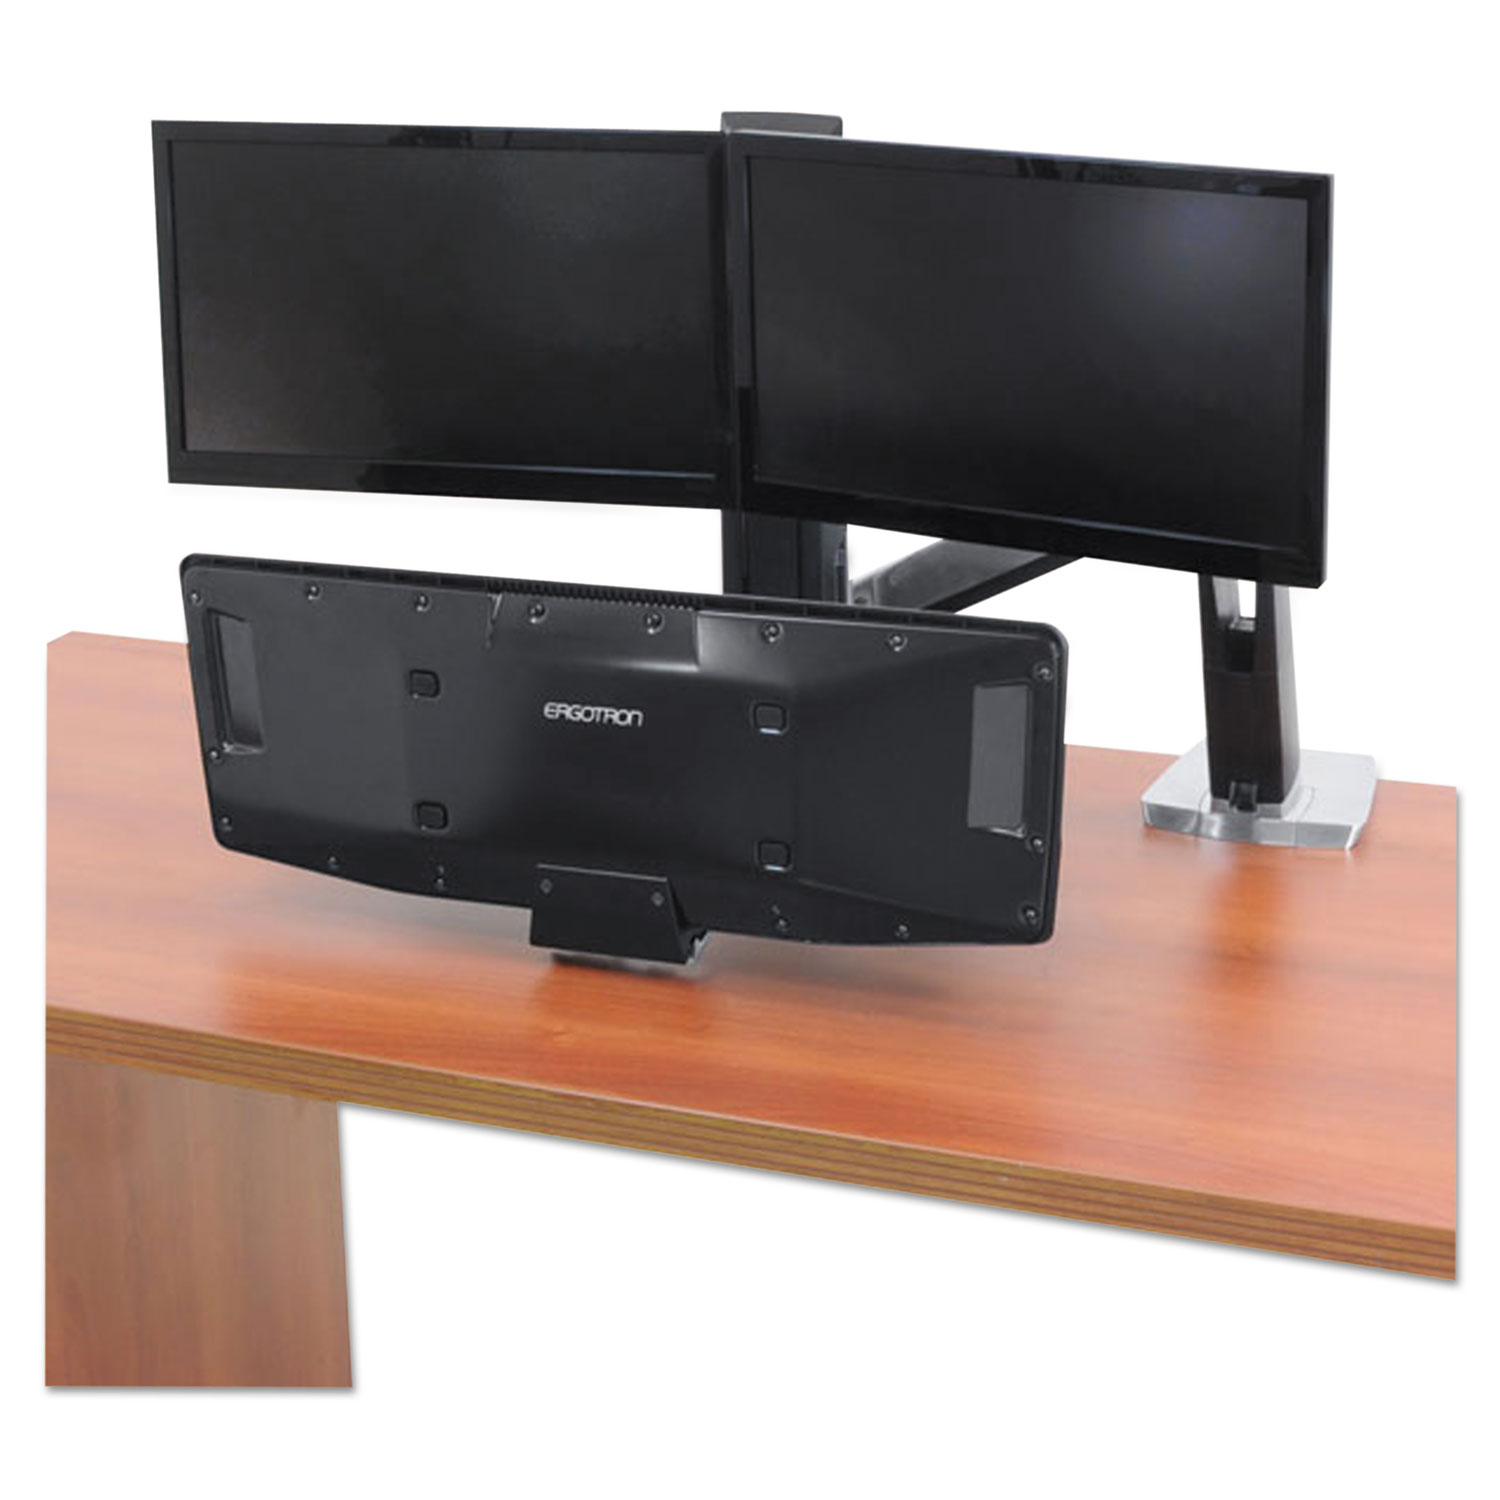 Ergotron WorkFit-A Dual Workstation With Suspended Keyboard - Standing desk converter - black, polished aluminum - image 3 of 5